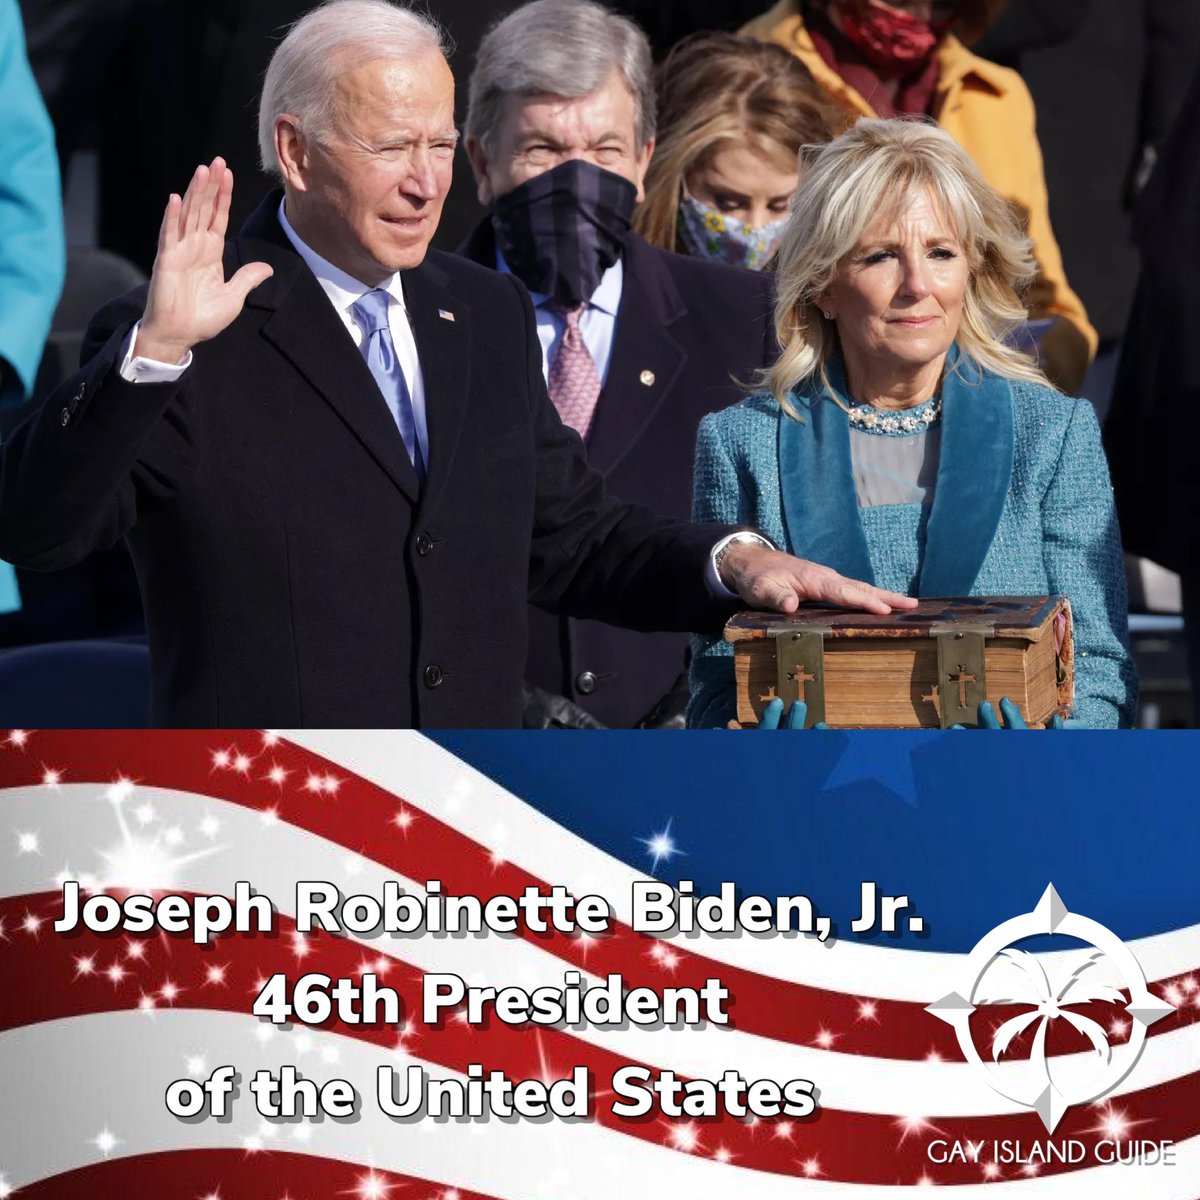 Joseph R. Biden, Jr. The 46th President of the United States. 

#gayislandguide #joebiden #46 #46thpresident #inauguration #america #gayhawaii #lgbthawaii #gay #lgbt #president #presidentbiden